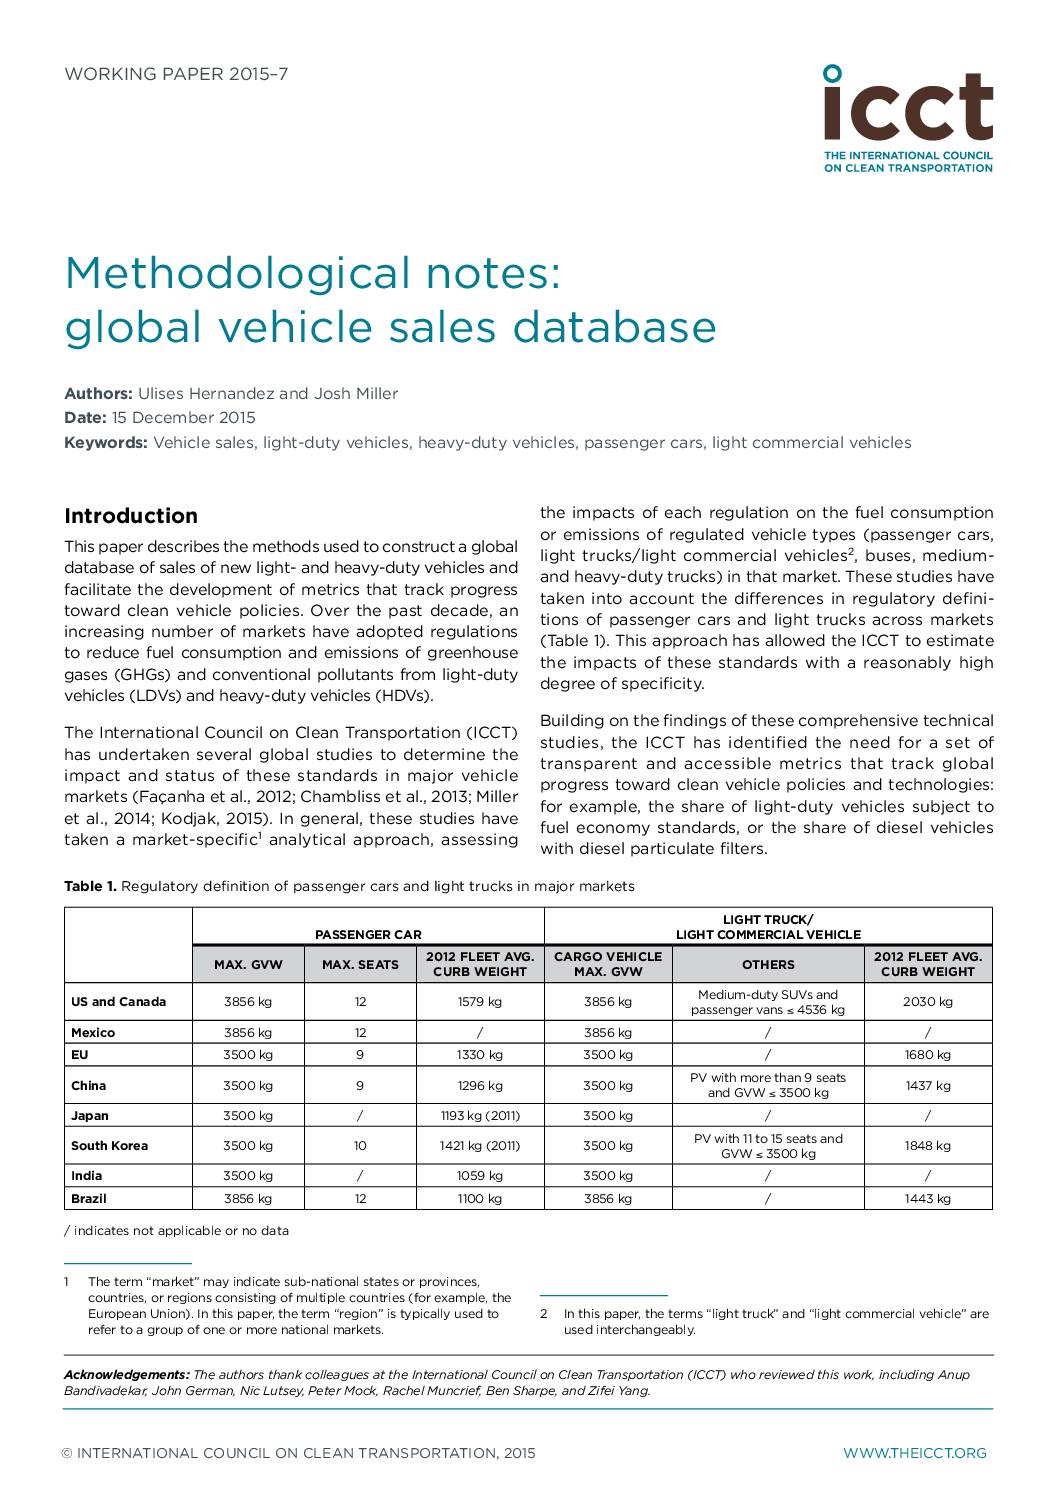 Methodological Notes: Global Vehicle Sales Database